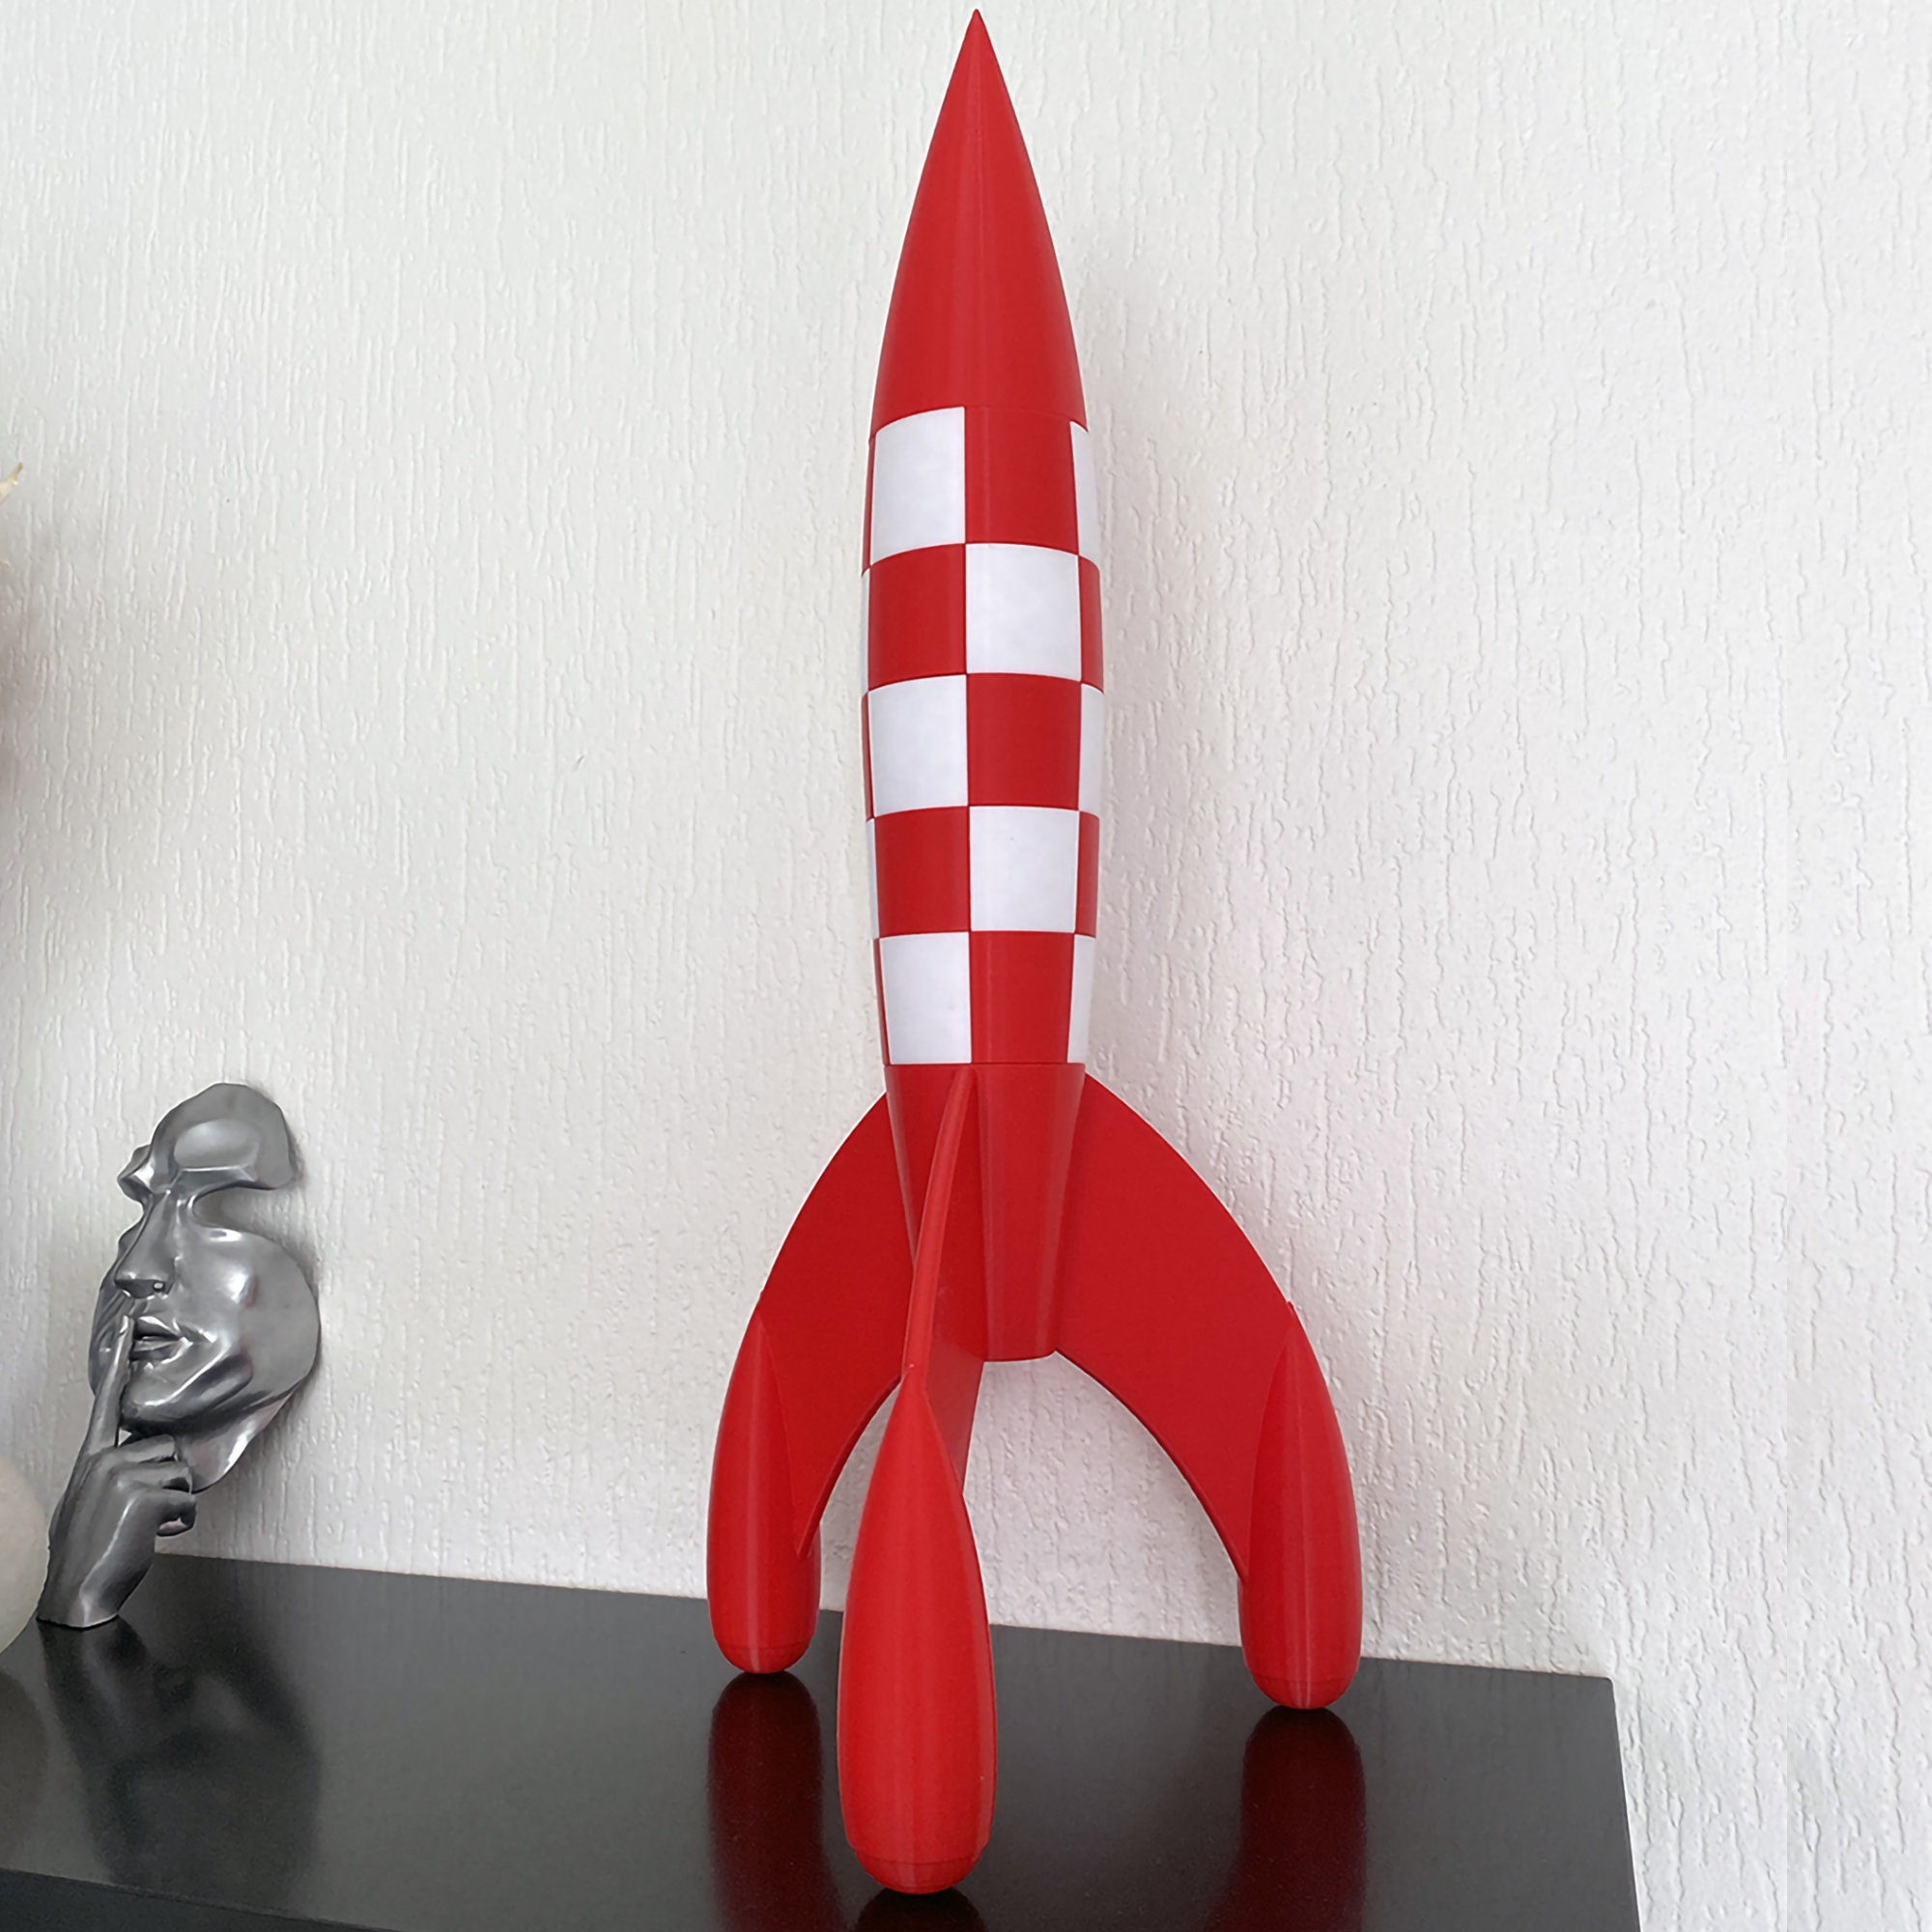 Tintin Rocket 3 Sizes Gift Idea 